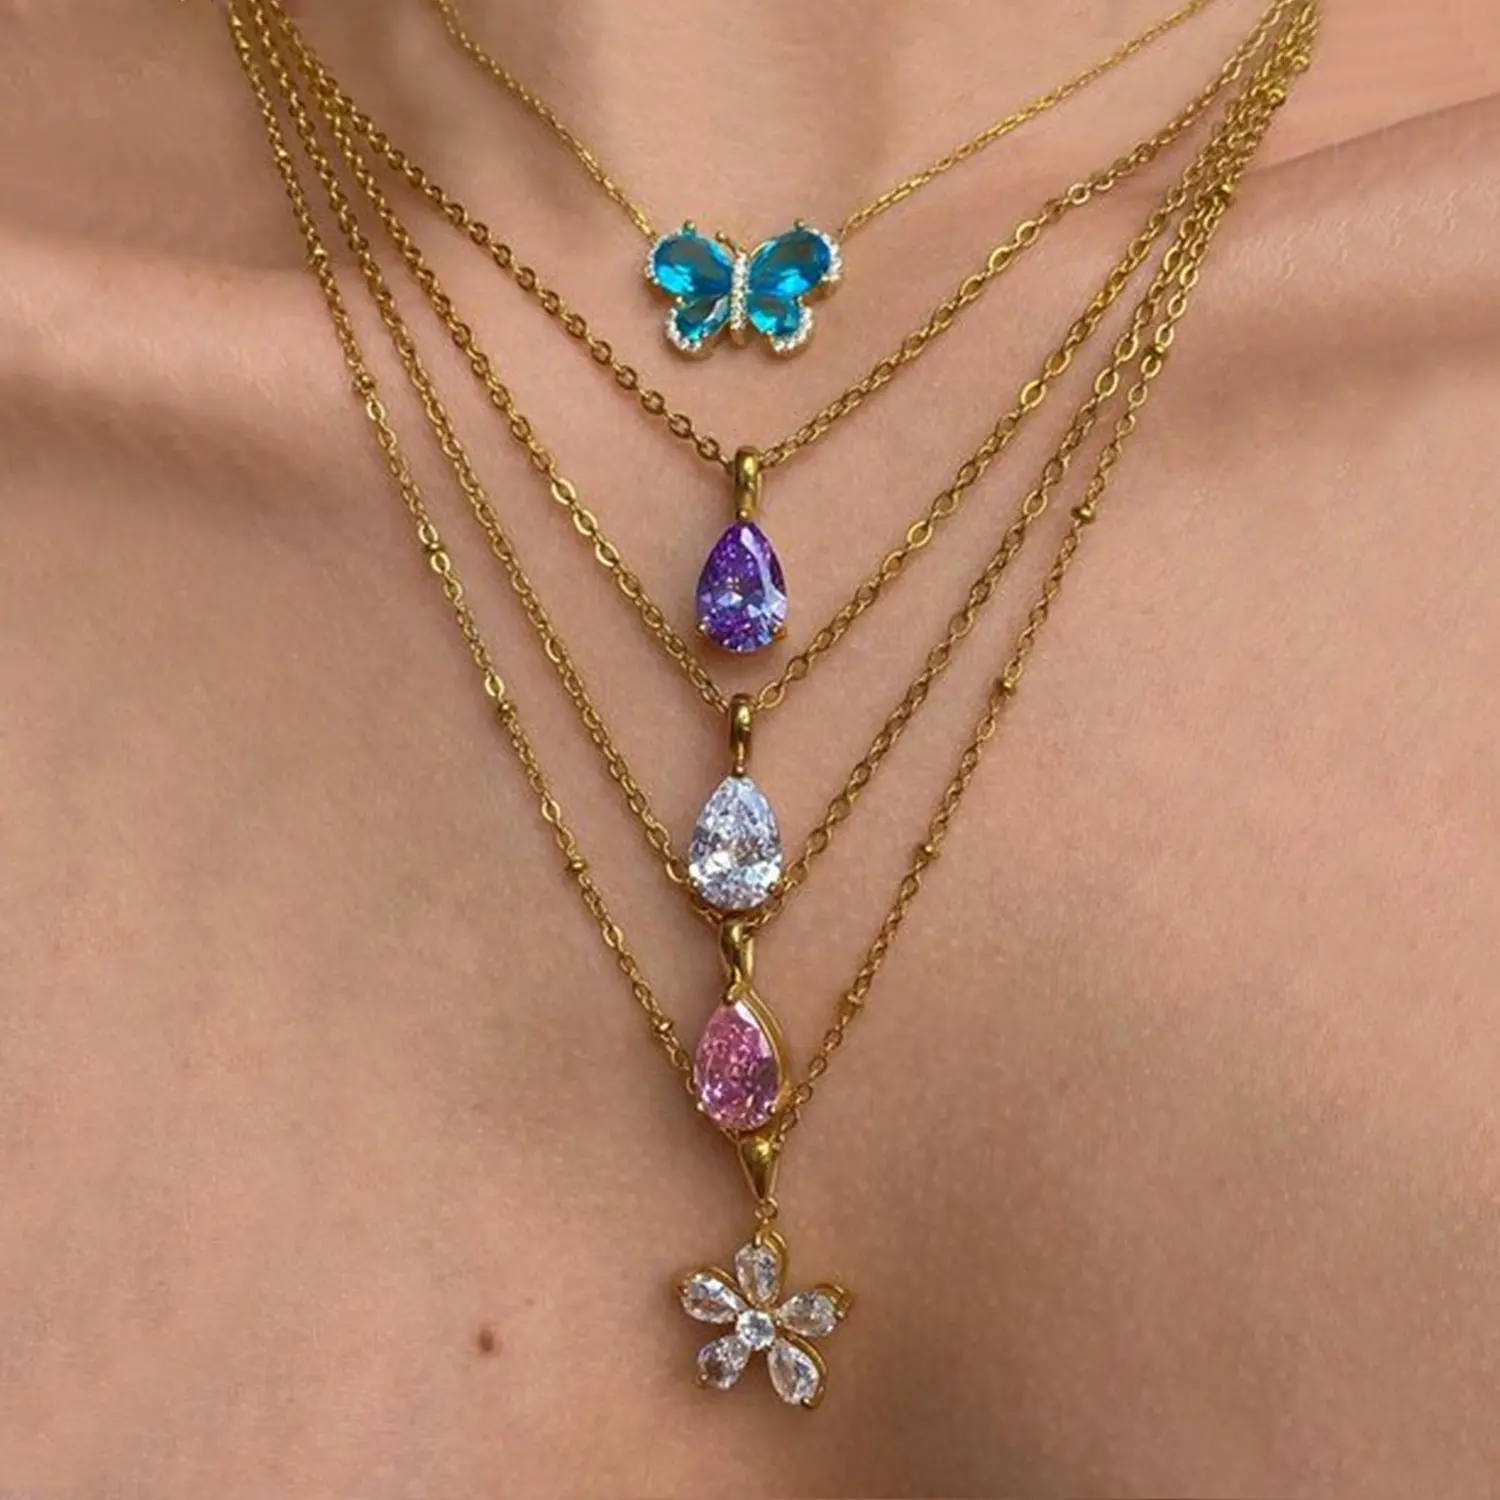 Popular WaterDrop Flower Necklace Stainless Steel Butterfly Birthstone Cubic Zircon Pendant Necklace